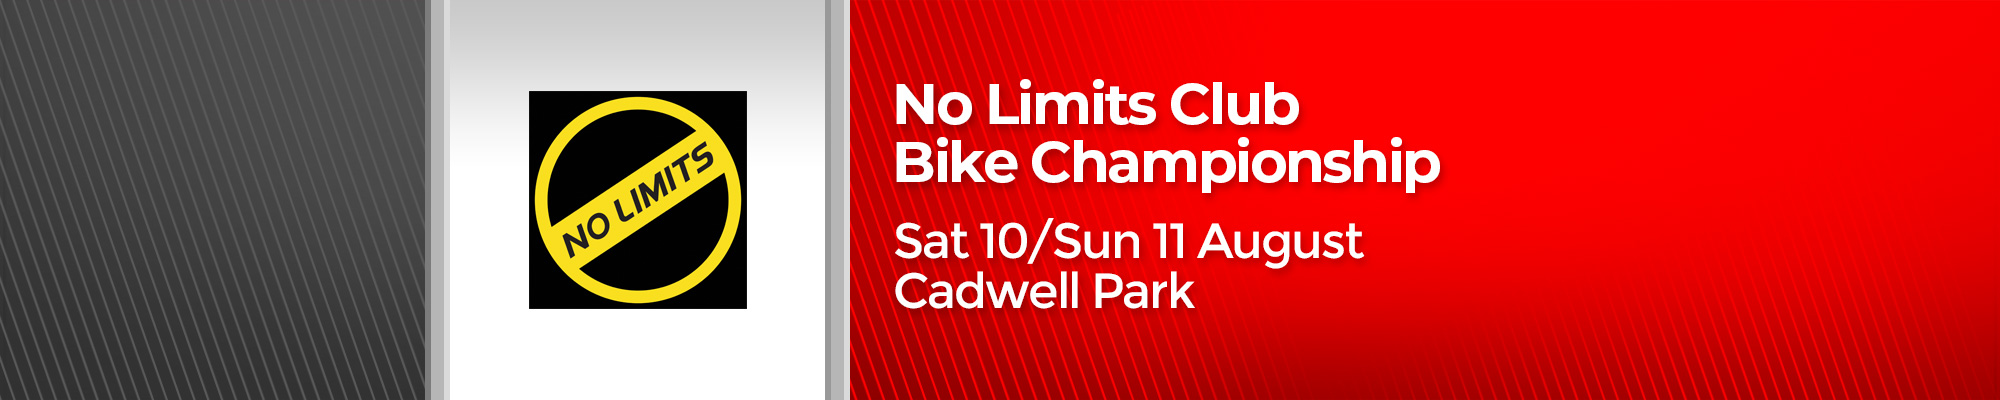 No Limits Club Bike Championships